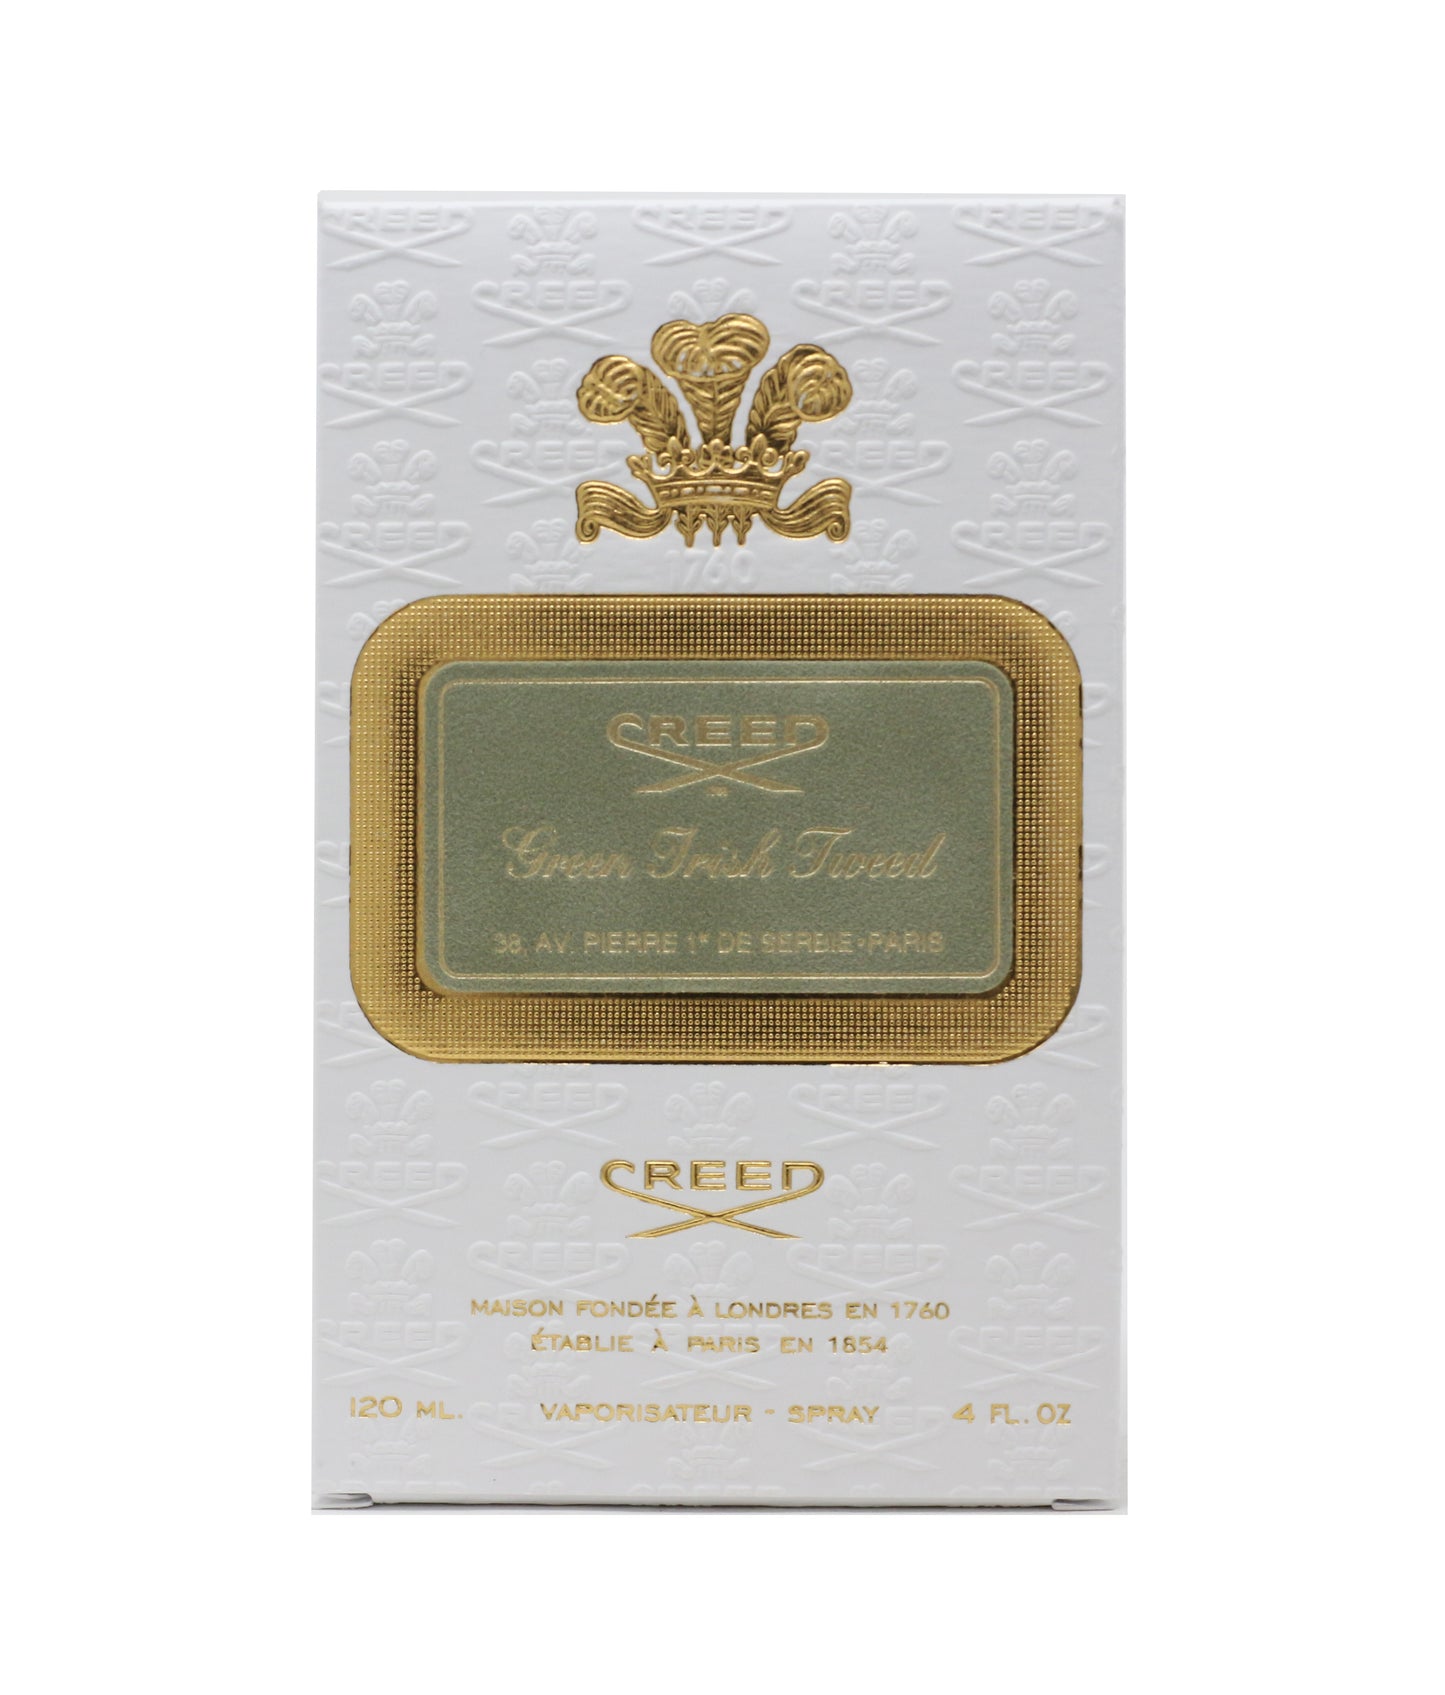 Creed Green Irish Tweed Parfum Spray 4oz/120ml New In Box